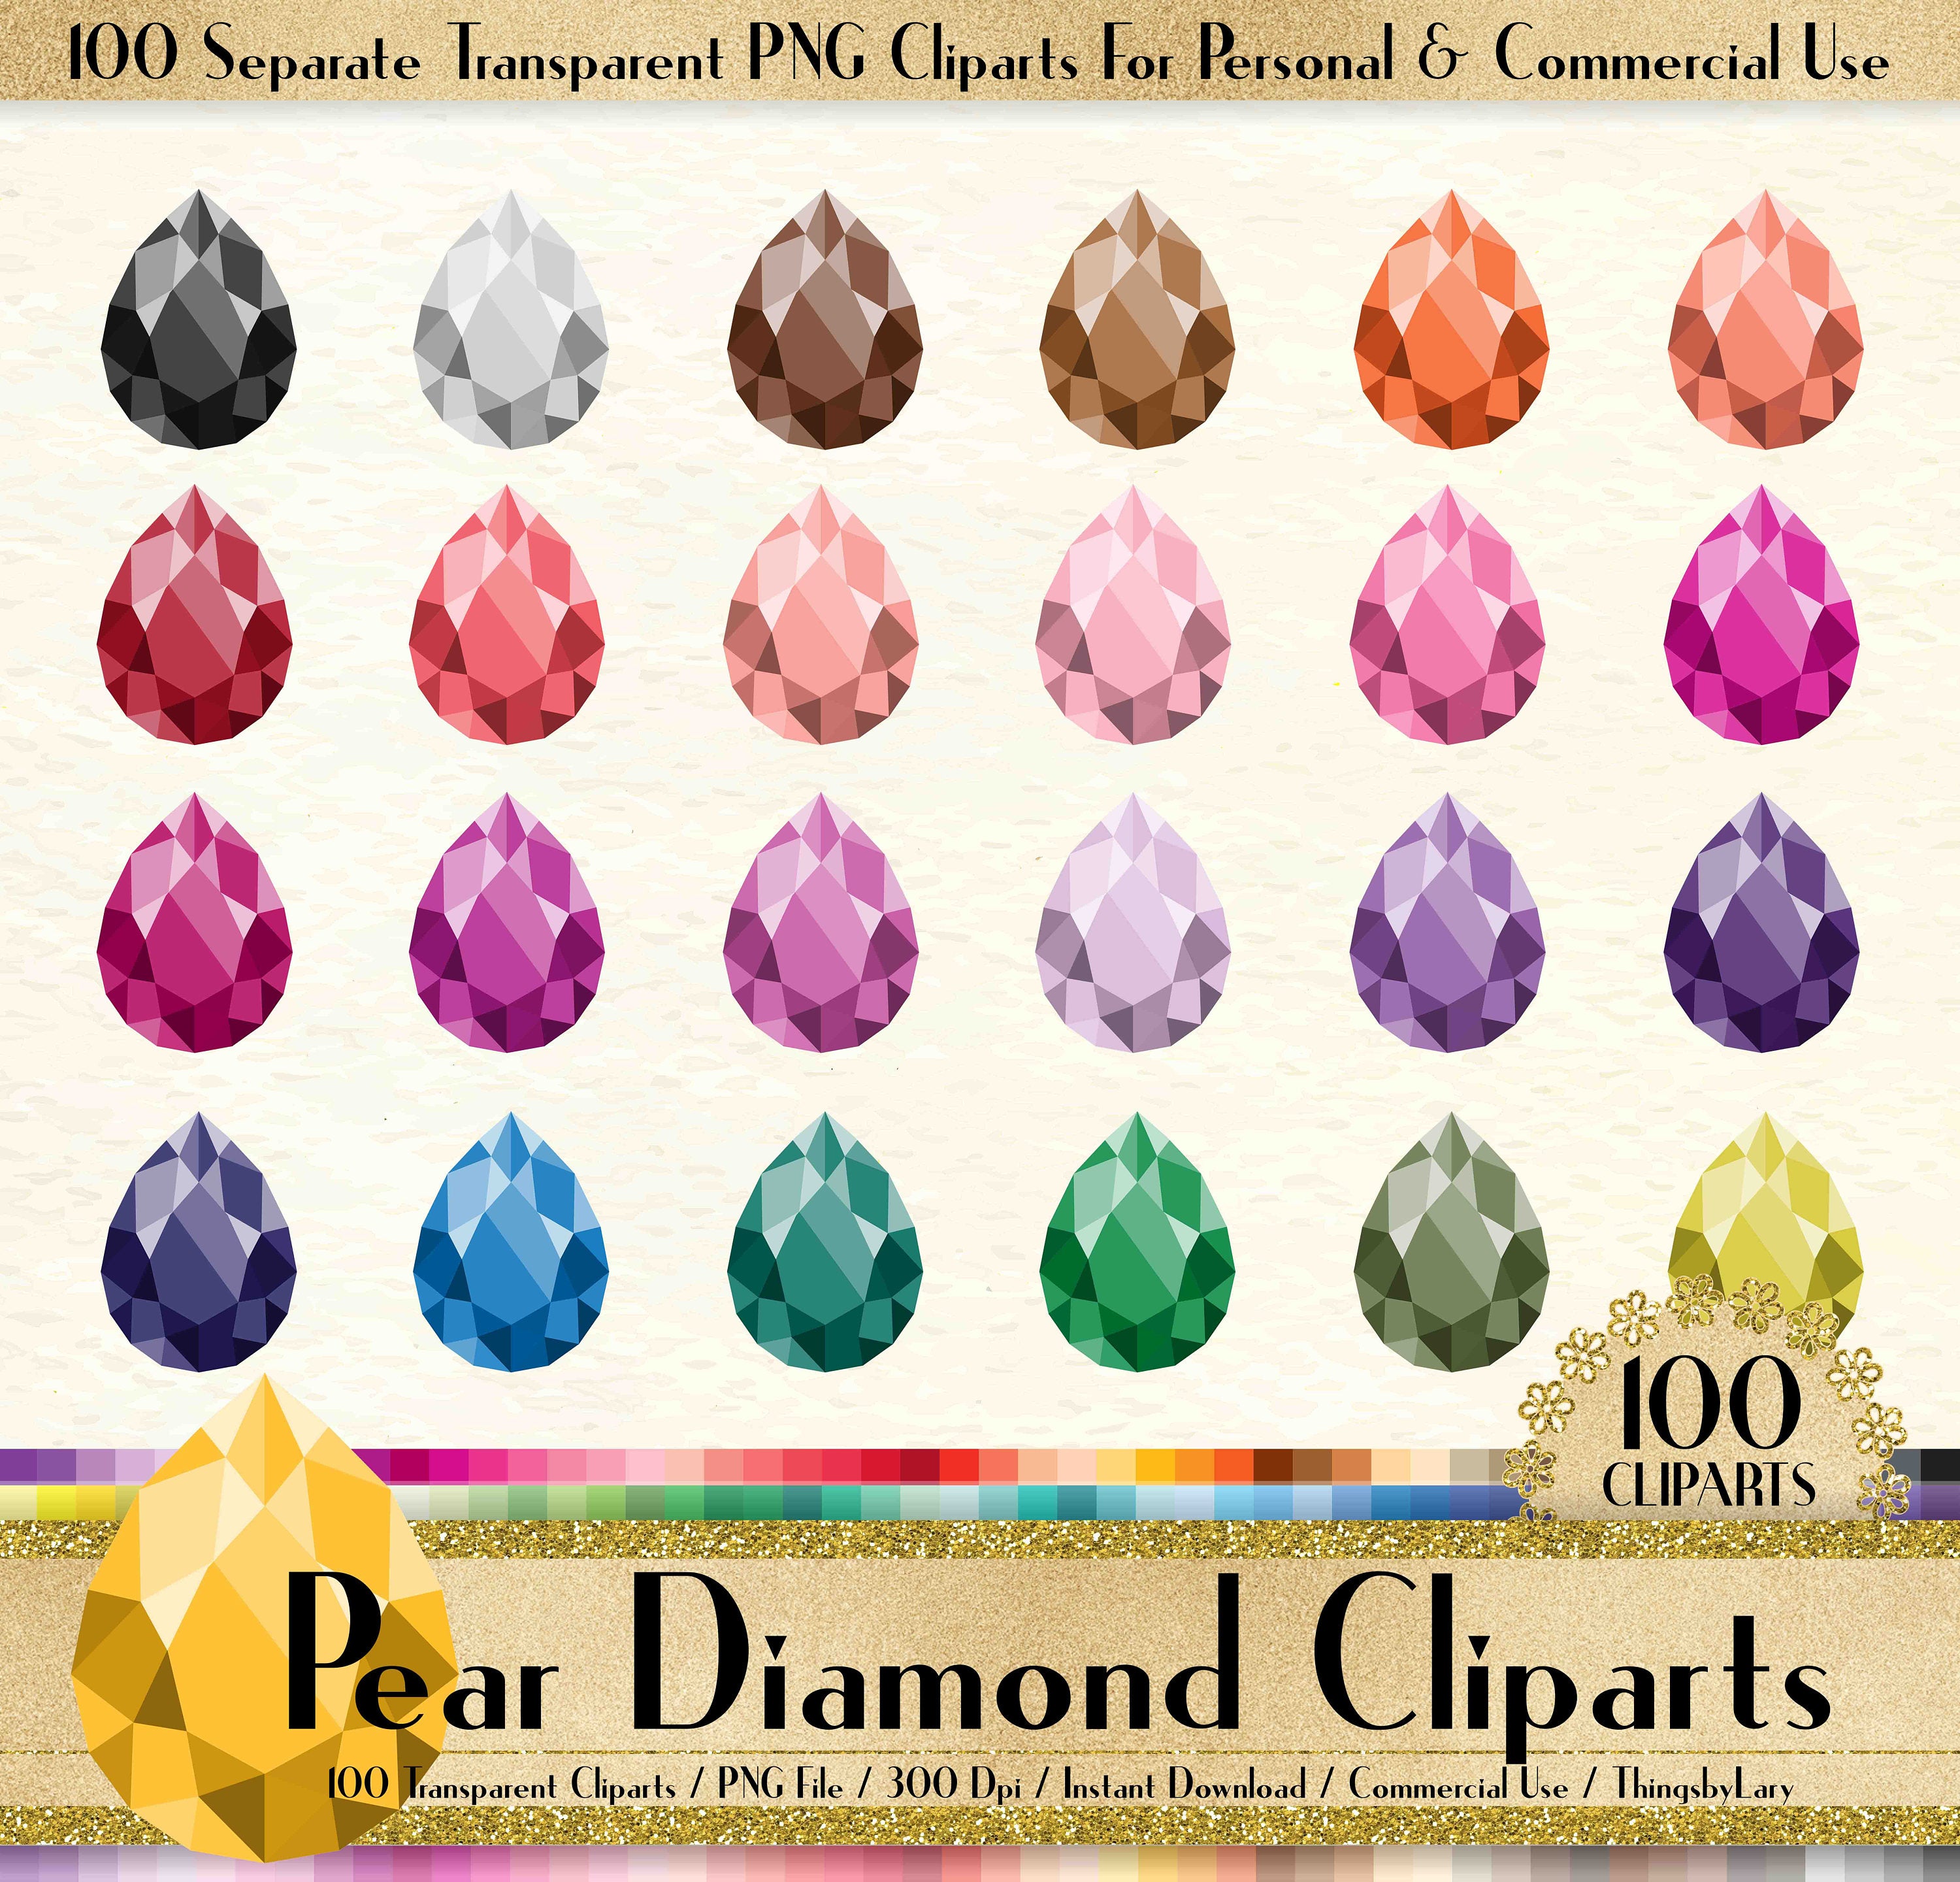 100 Transparent Pear Diamond Clipart, Jewelry Clipart, Fashion Clipart, 100 Diamond Clipart, Planner Clipart, Transparent, Rainbow